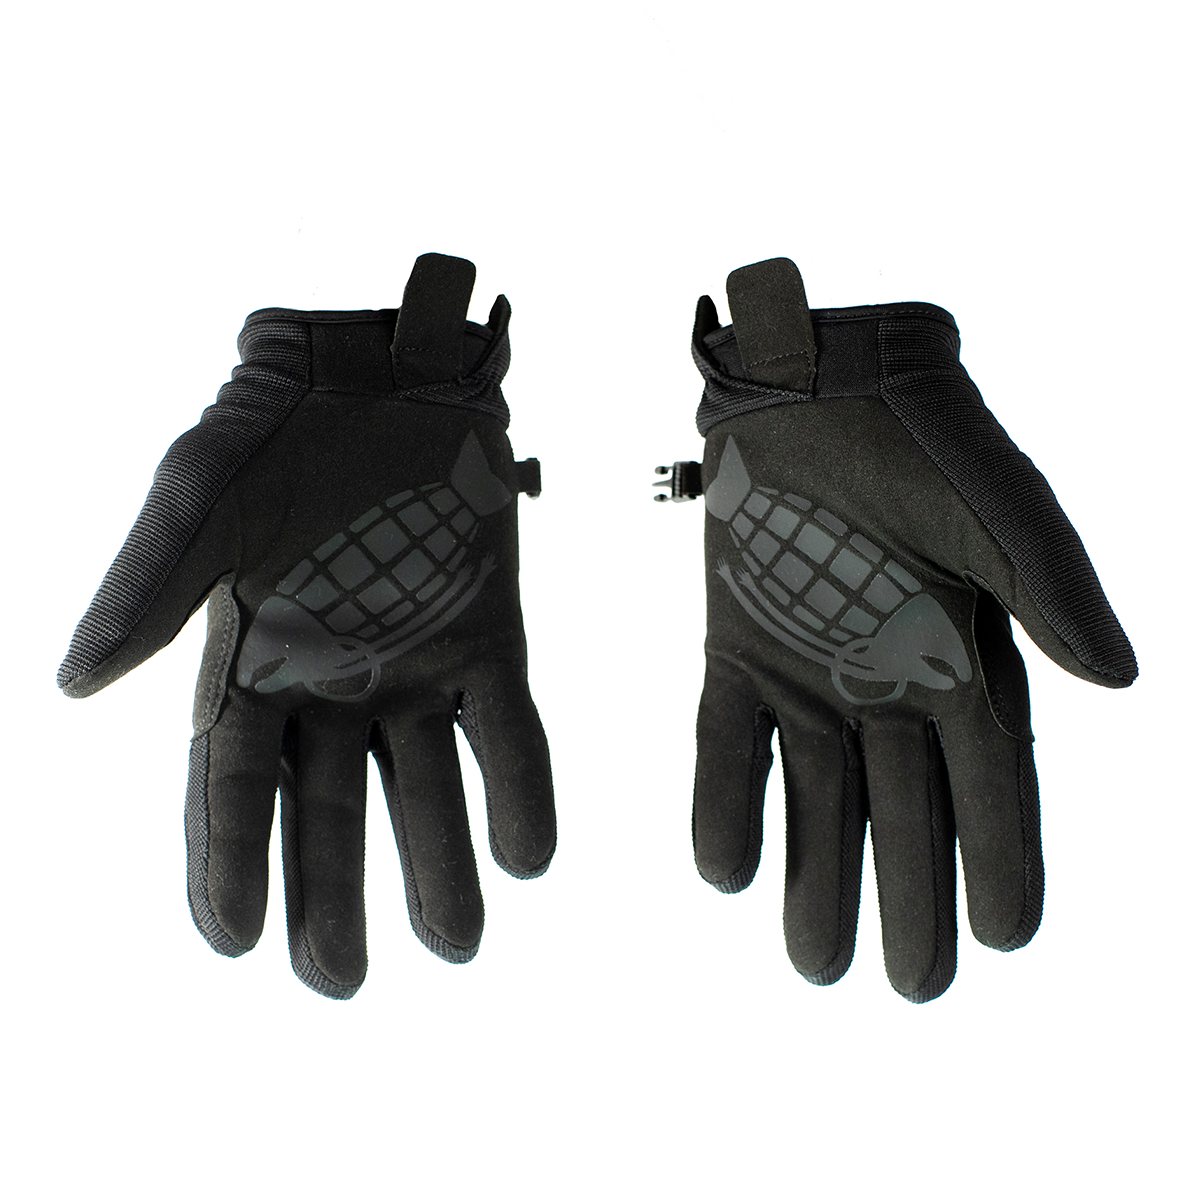 Salmon Arms Spring Glove - Black/Black